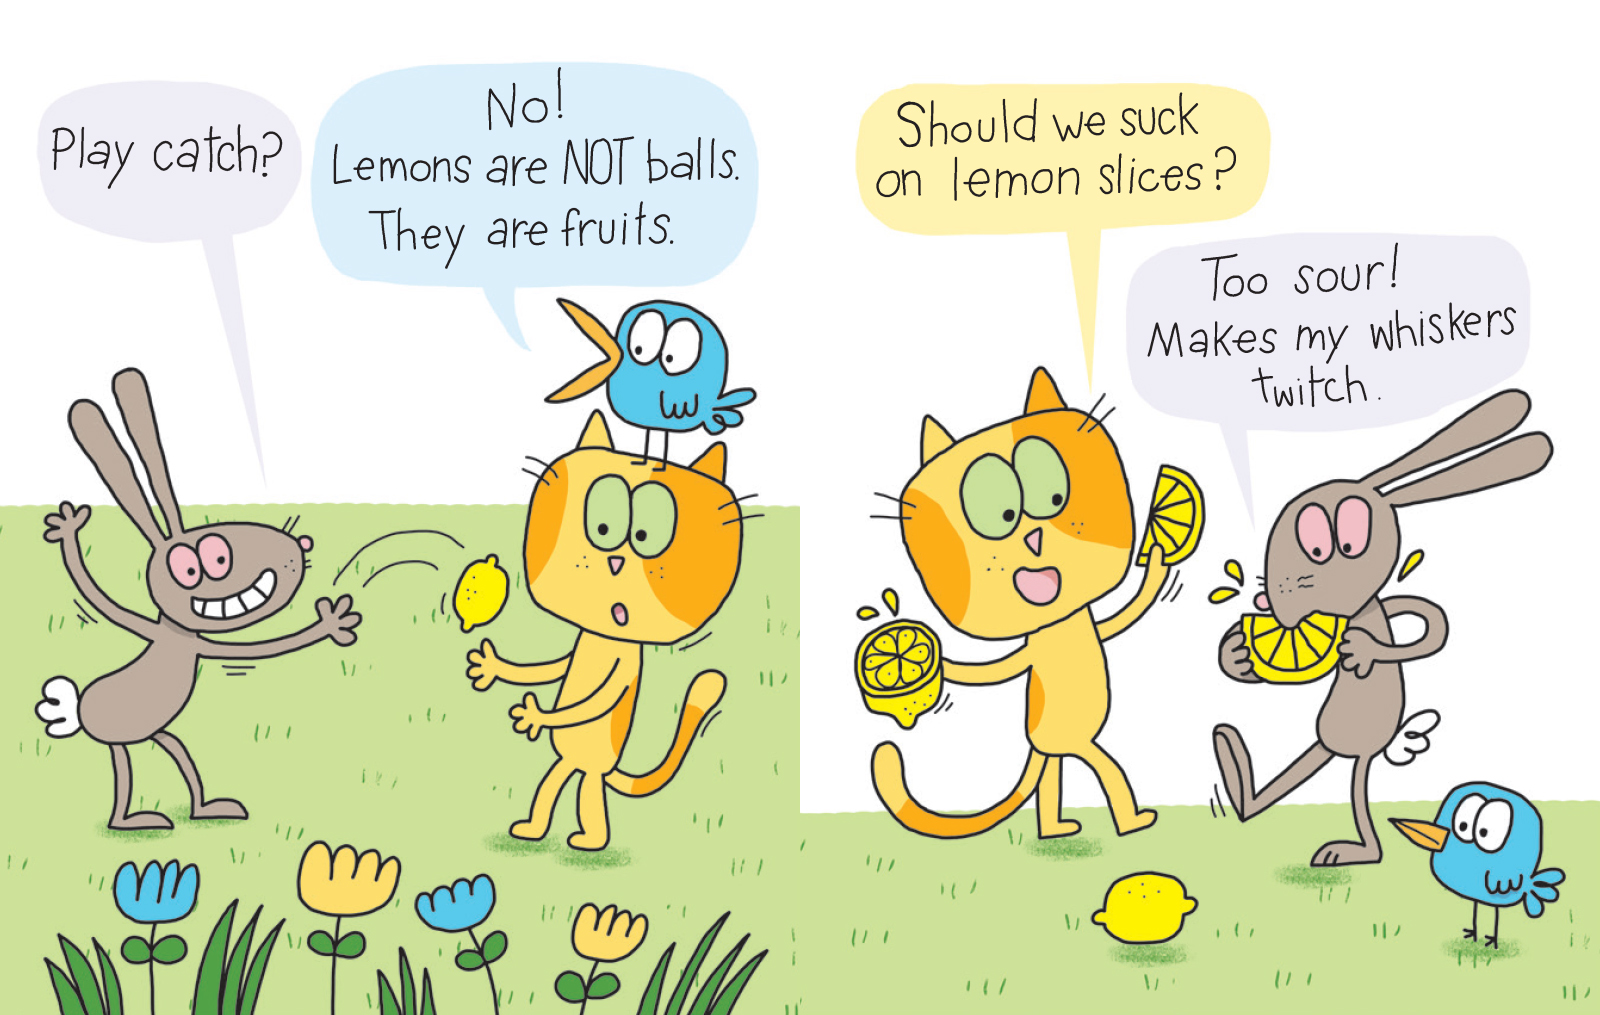 I Really Want to Make Lemonade!